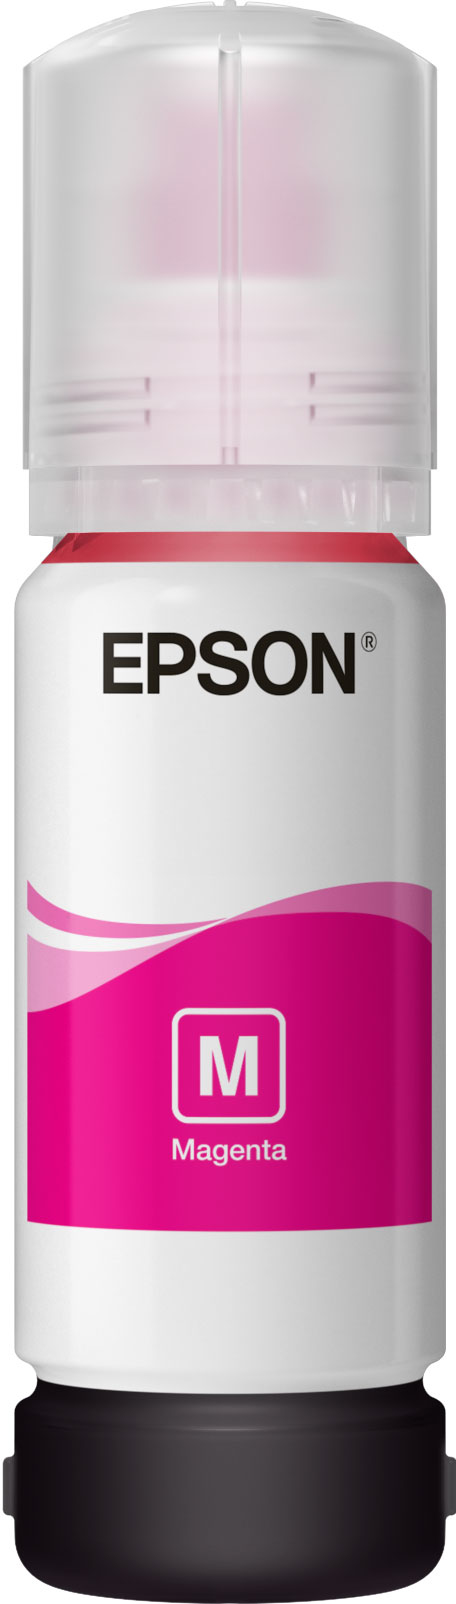 Epson Ink/102 Ink Bottle 70ml MG